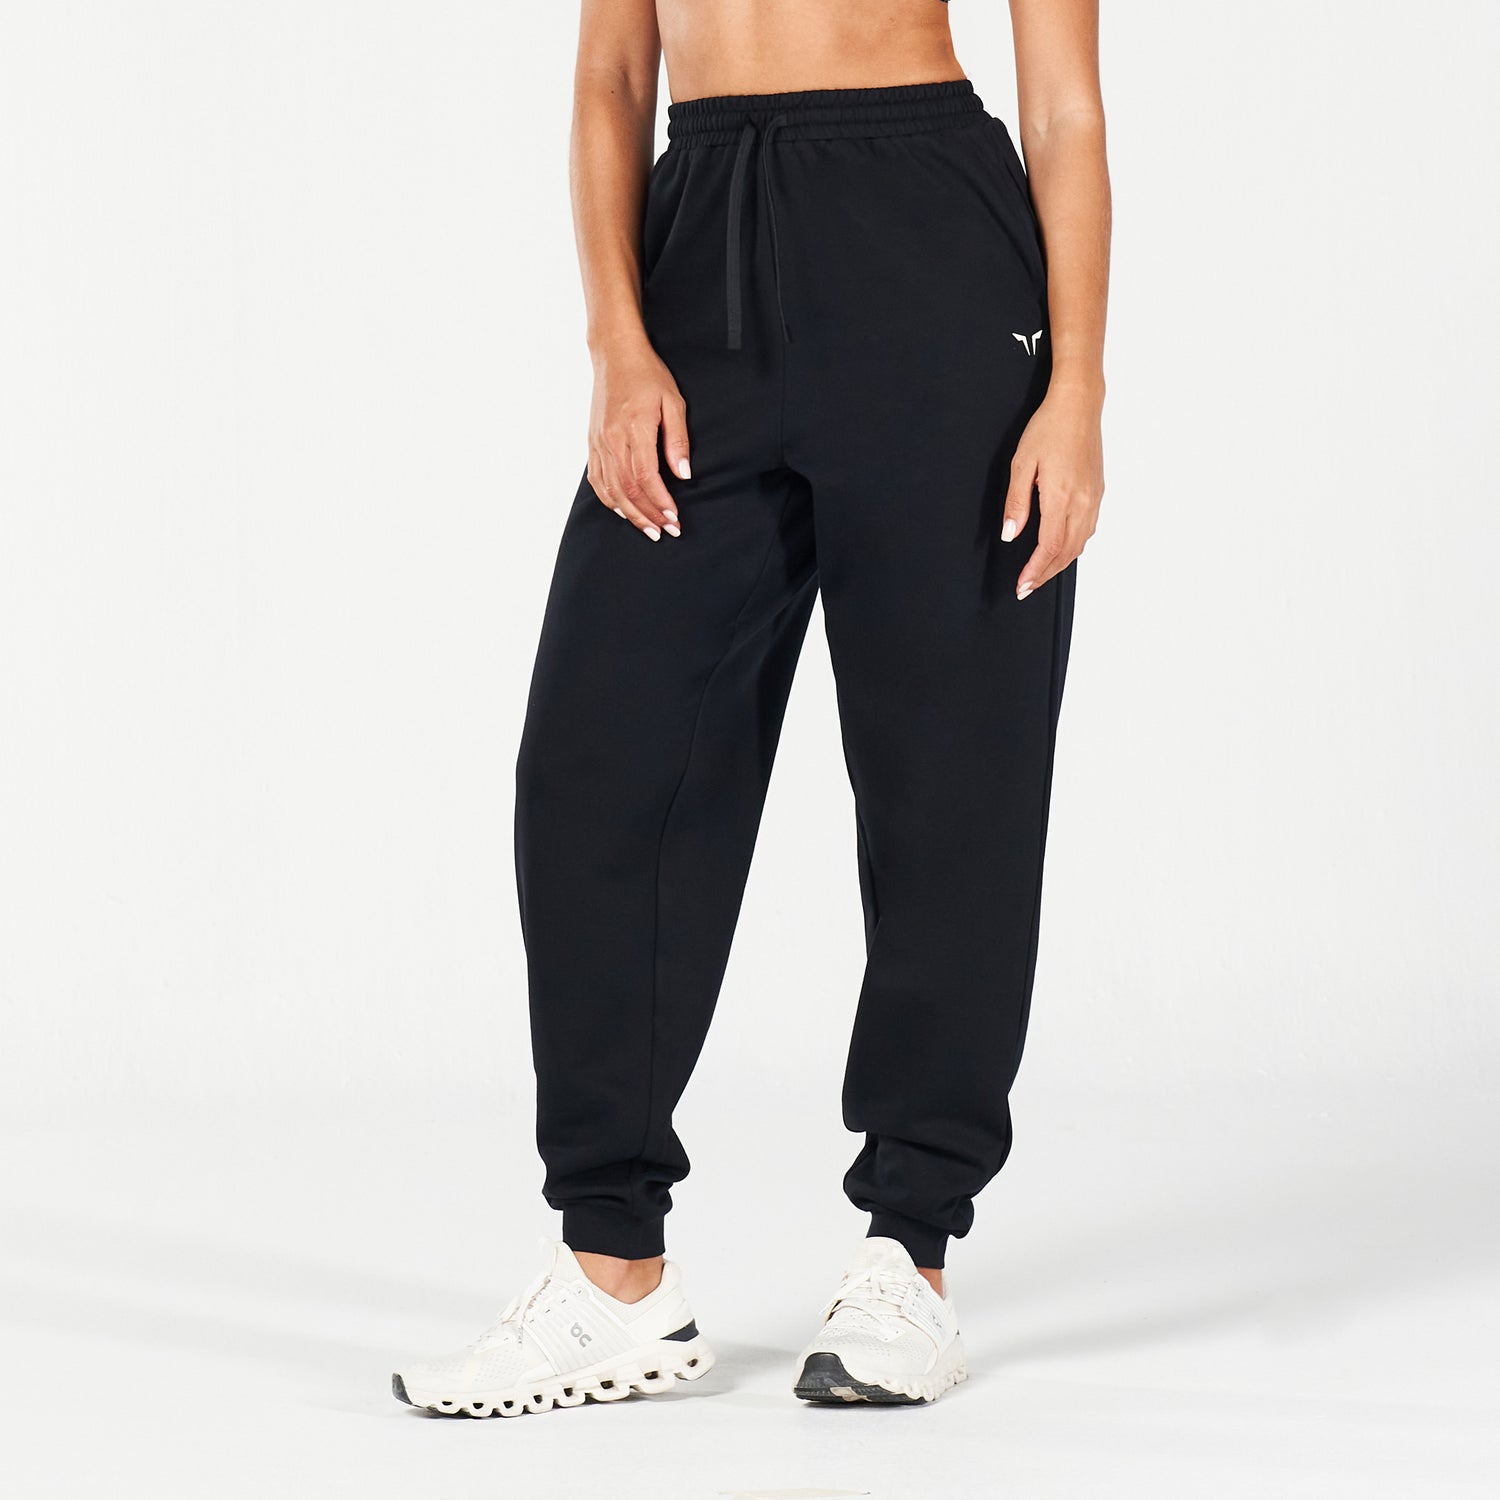 squatwolf-workout-clothes-core-oversized-sweatpants-black-gym-pants-for-women